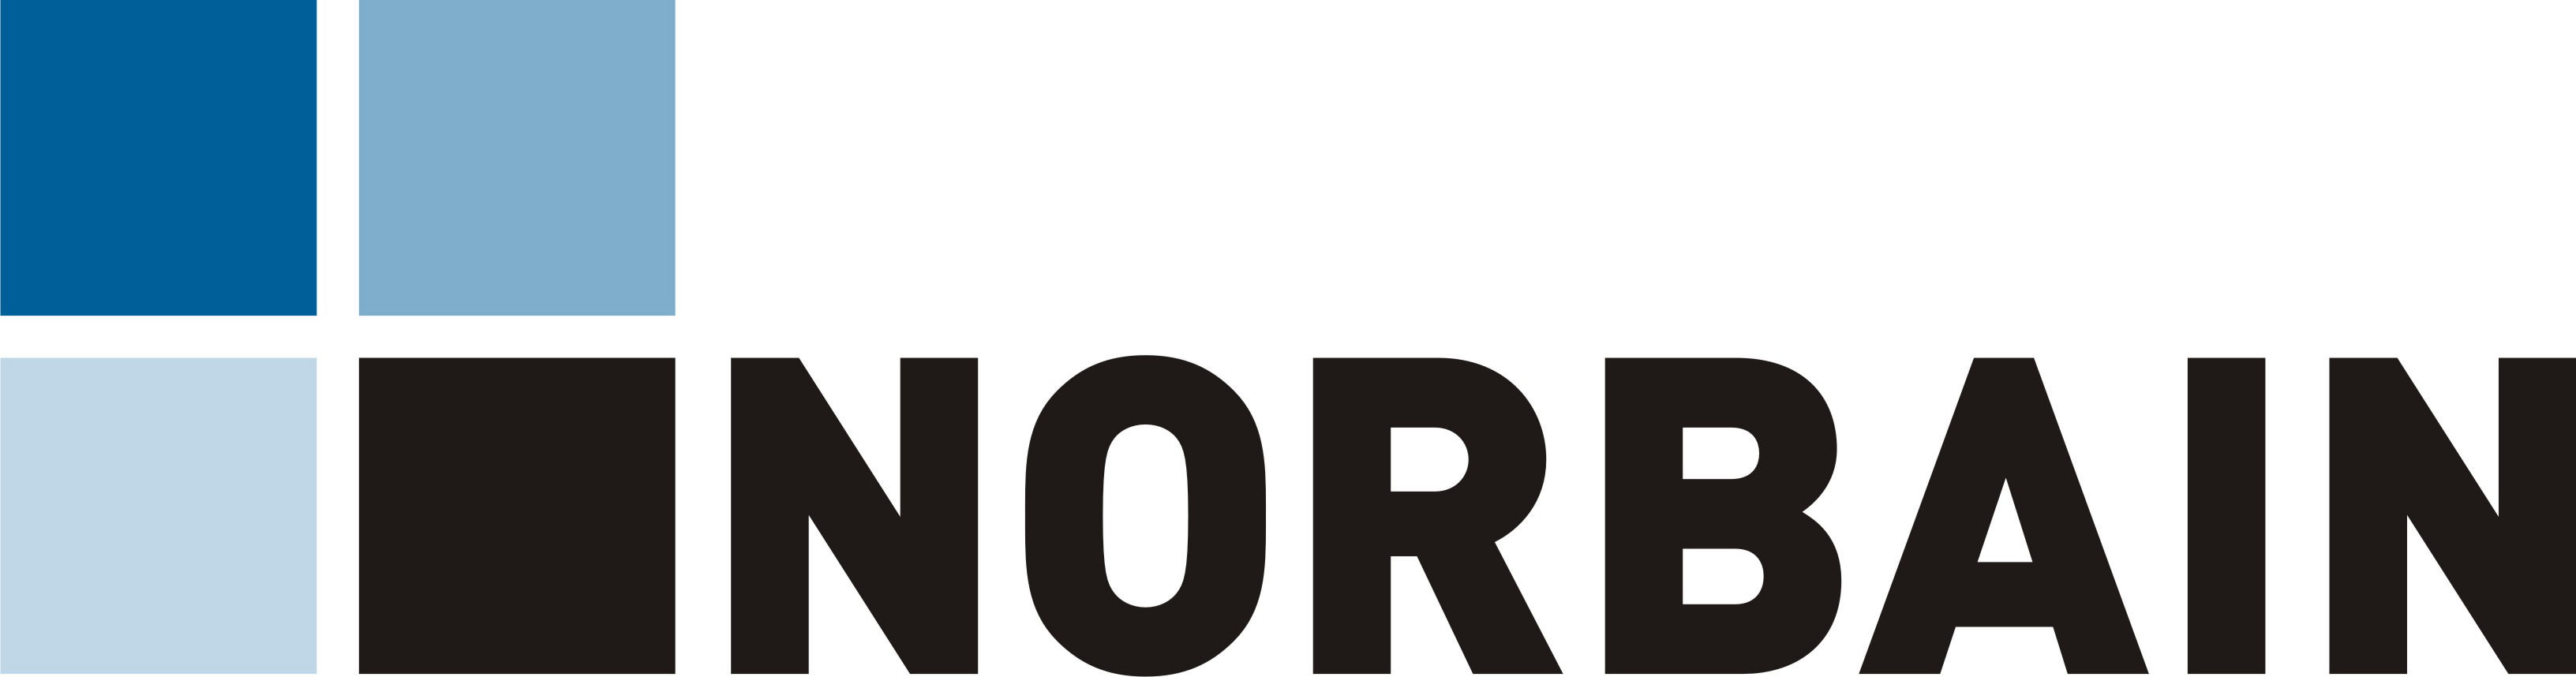 logo norbain